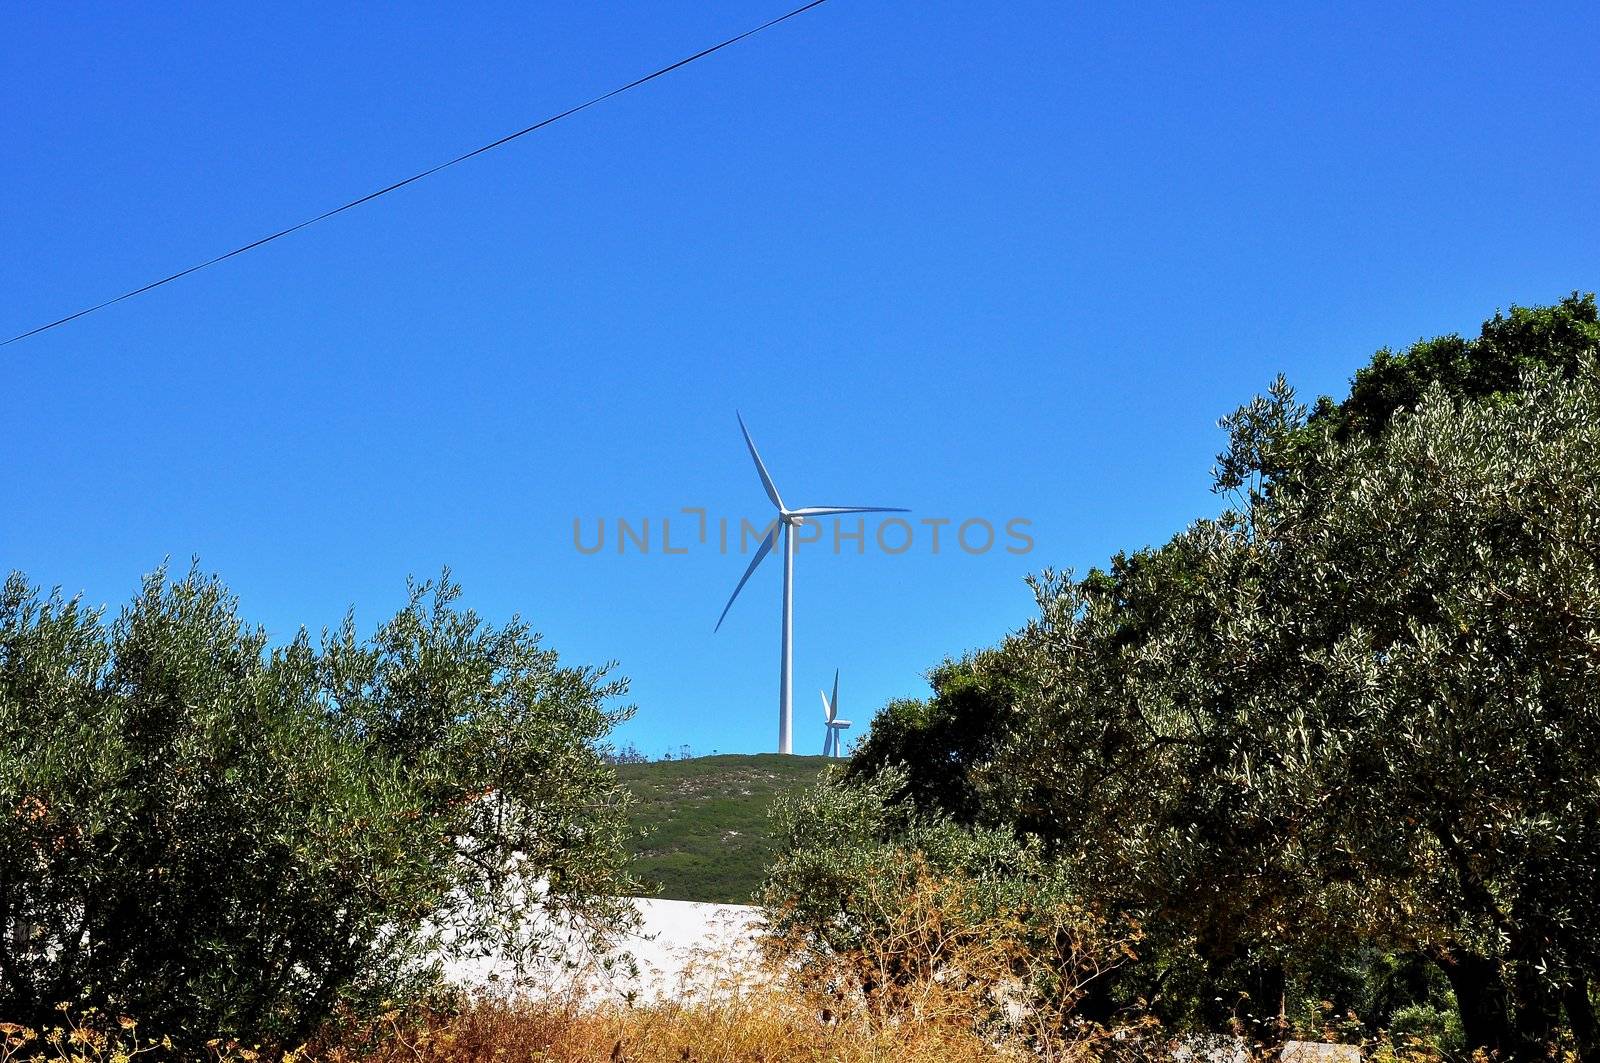 Landscape with wind power generators by vas25